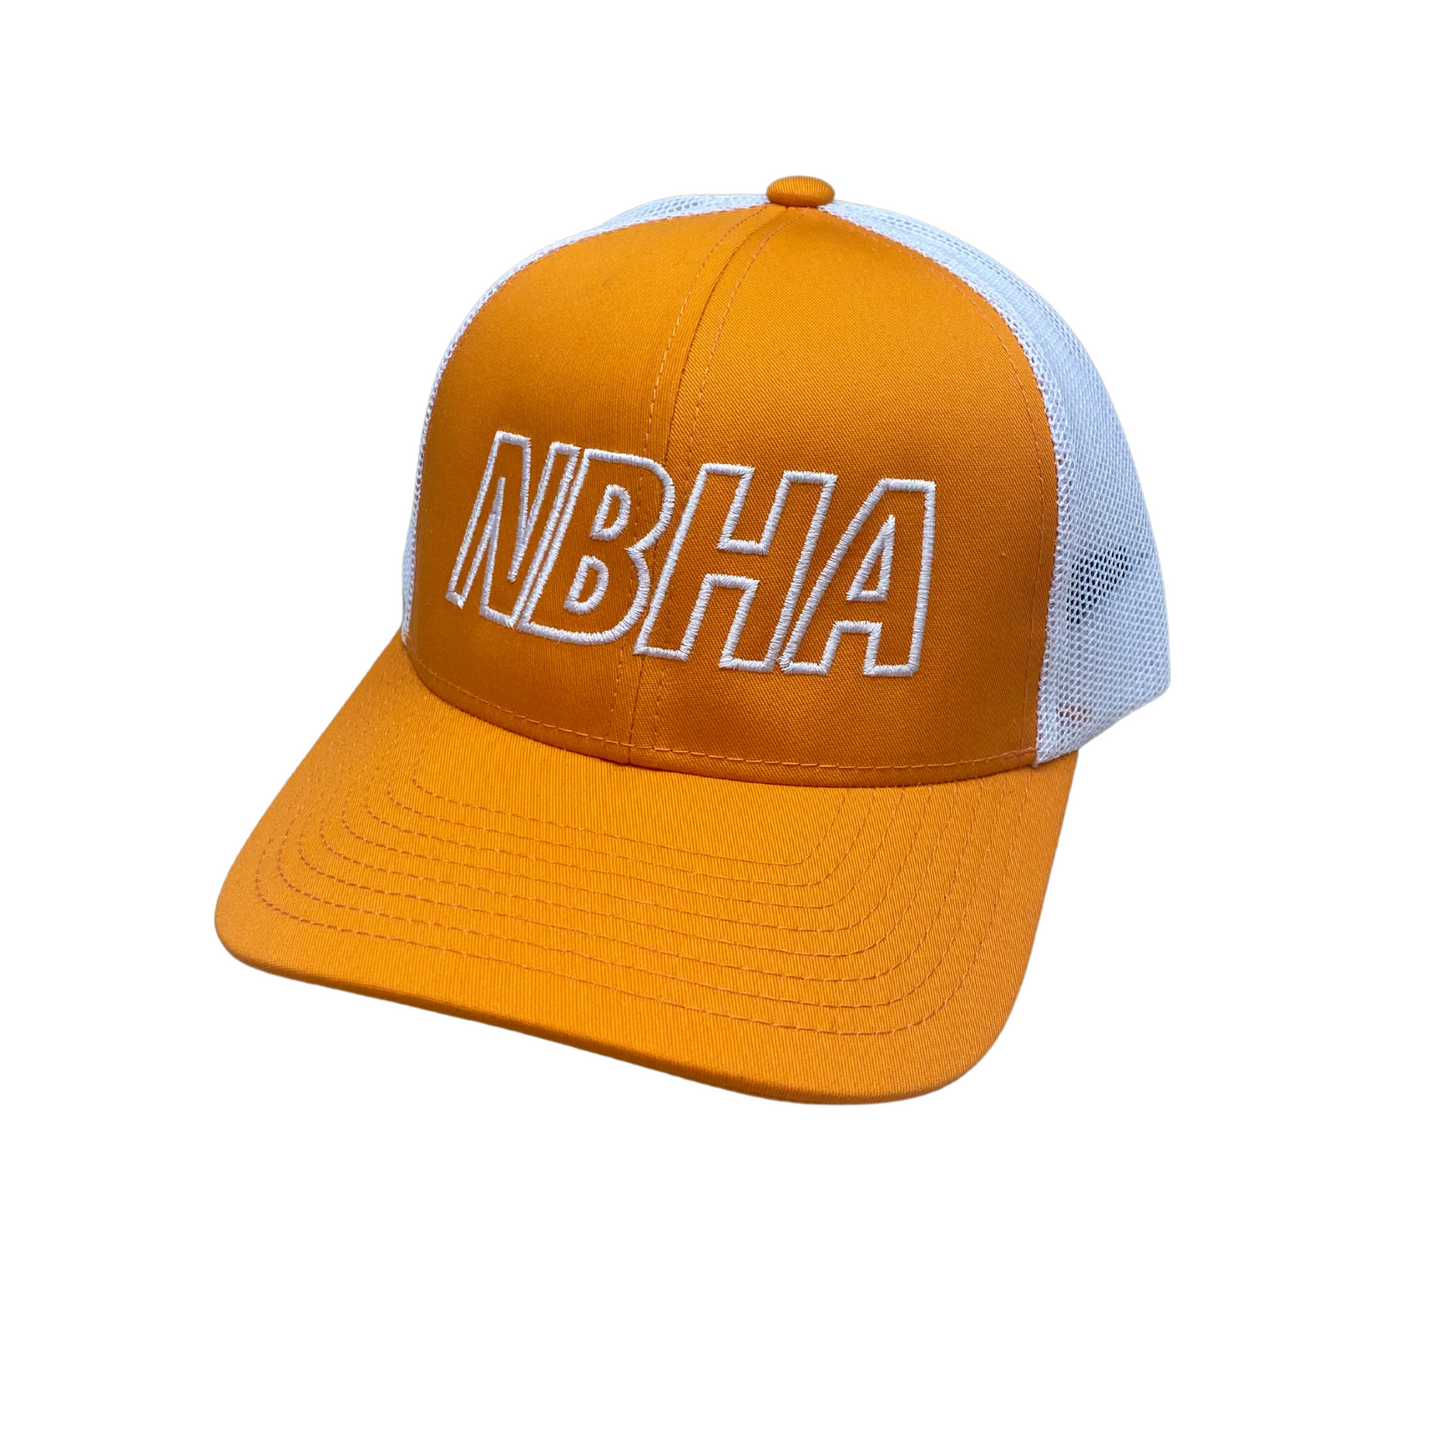 NBHA Trucker Hat : Orange/White